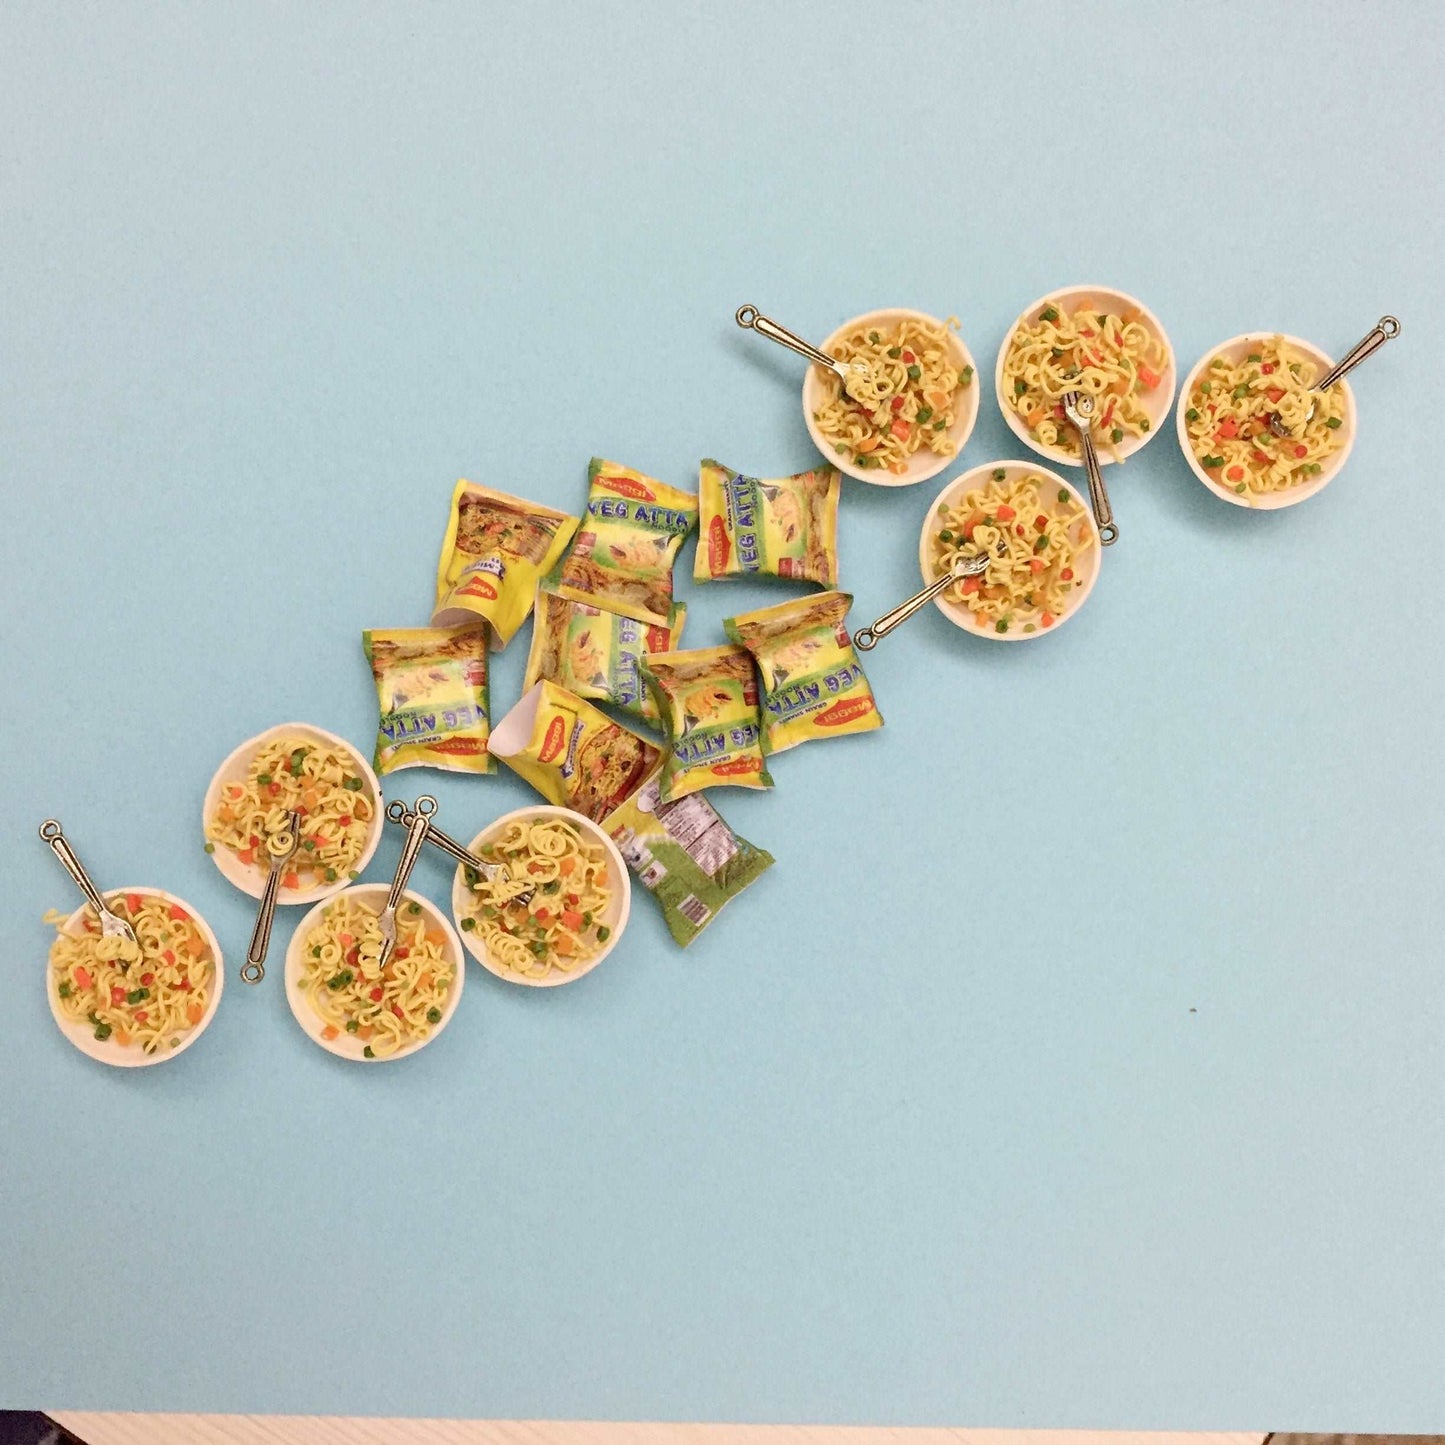 Maggi Instant Noodle Miniature Food Magnet